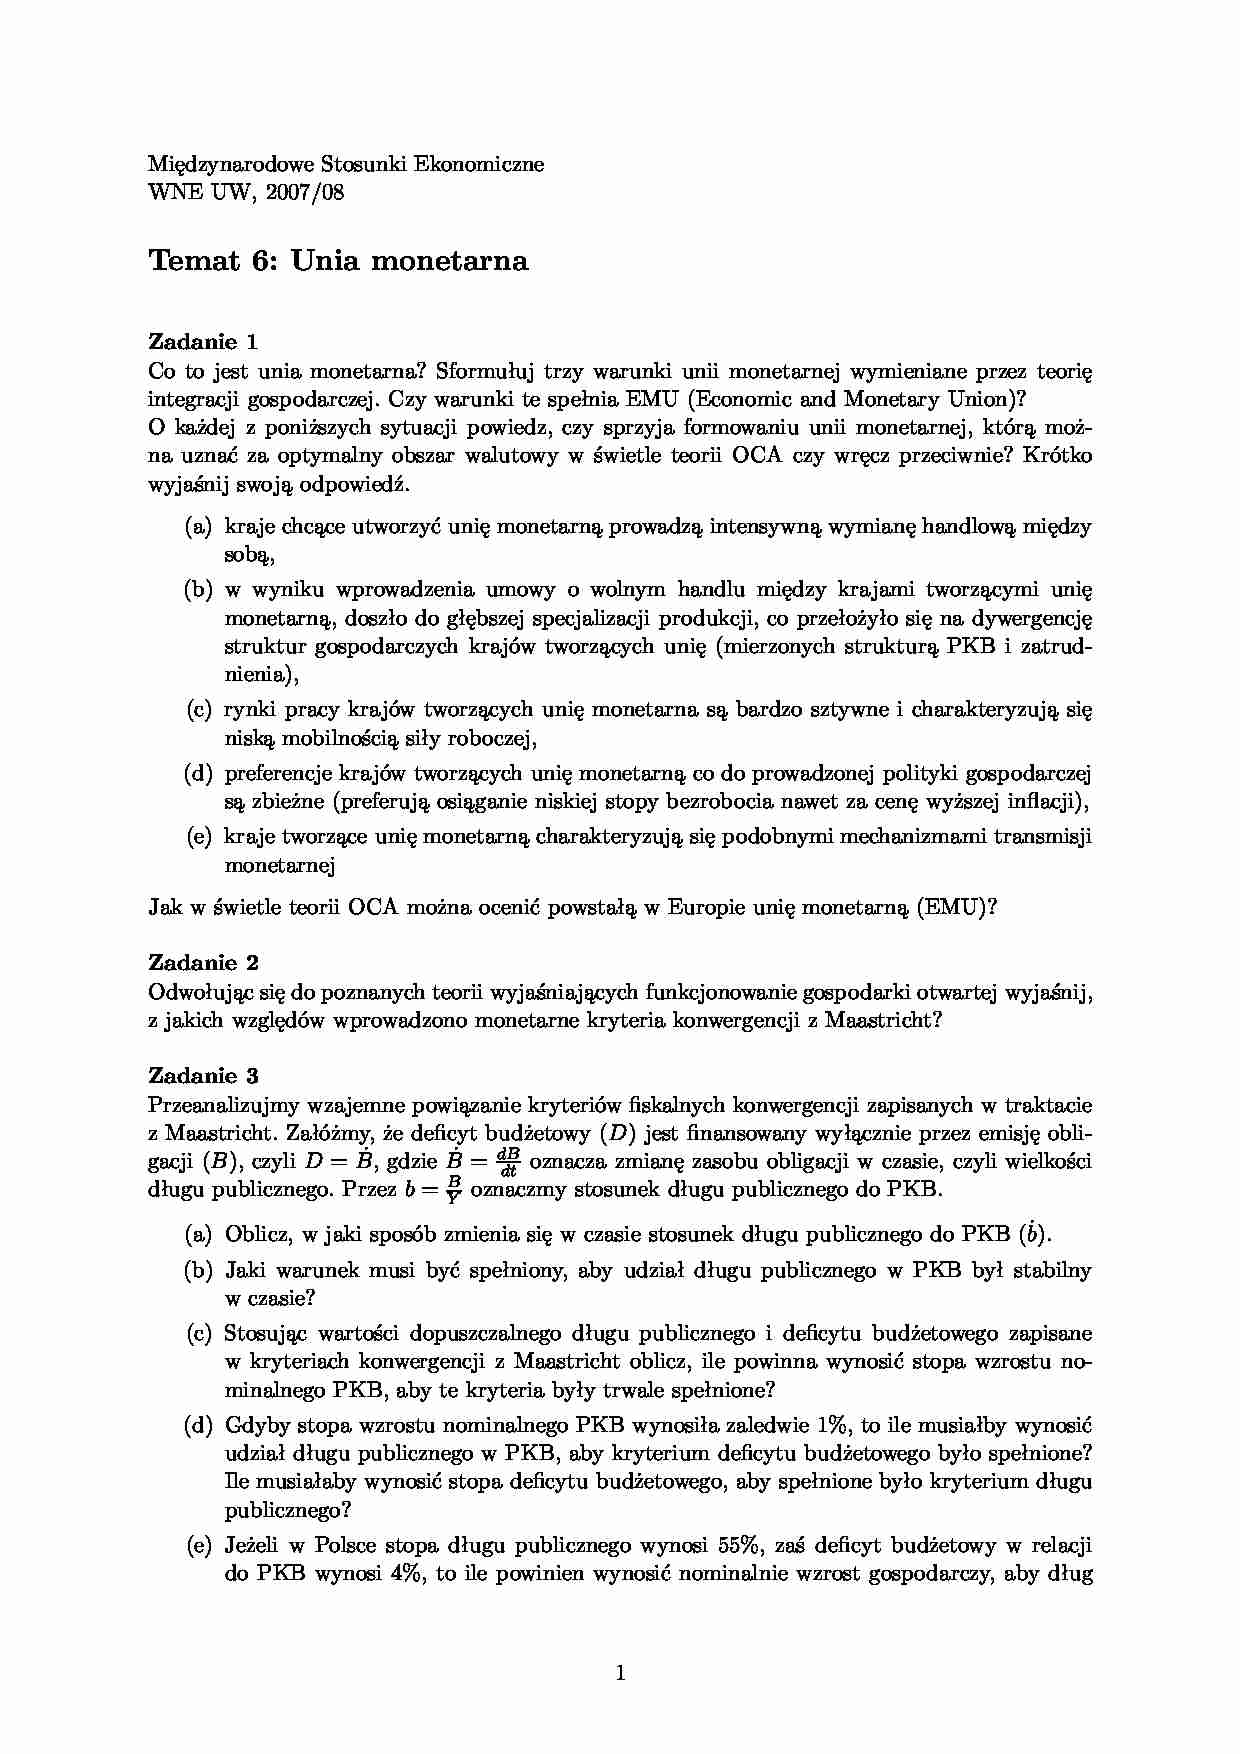 Unia monetarna-zadania - strona 1